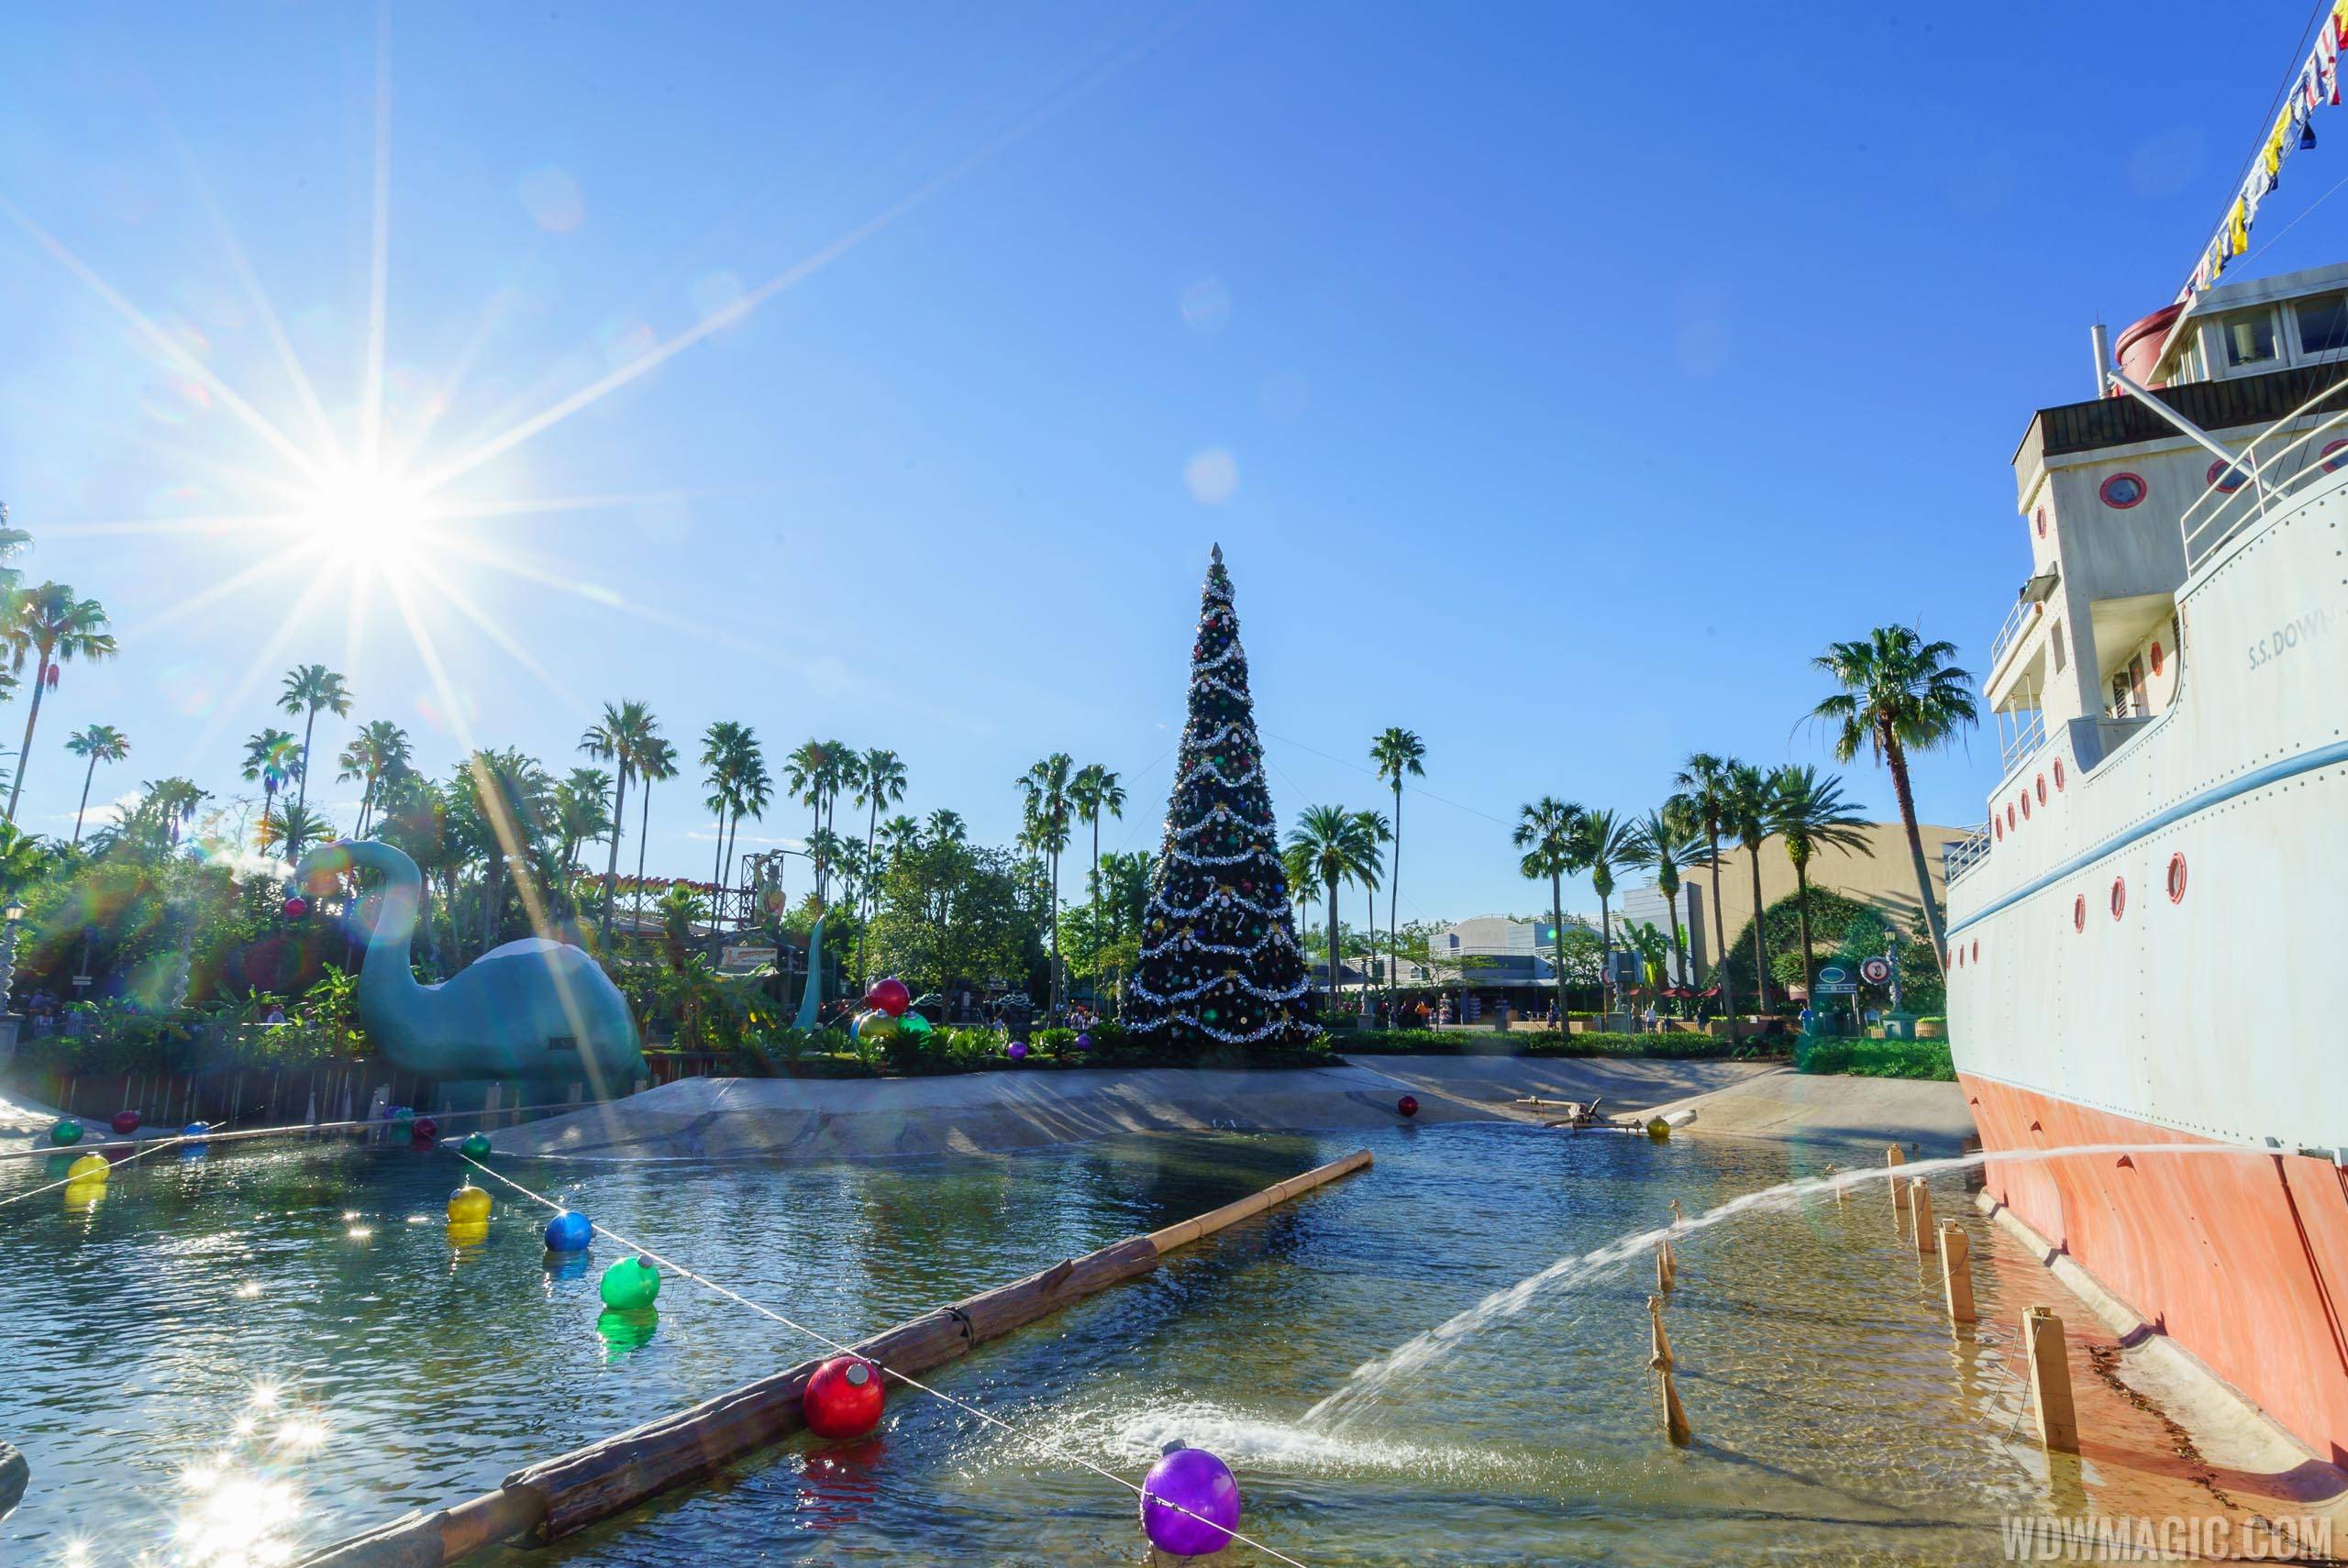 PHOTOS - The new holiday decor debuts on Echo Lake at Disney's Hollywood Studios